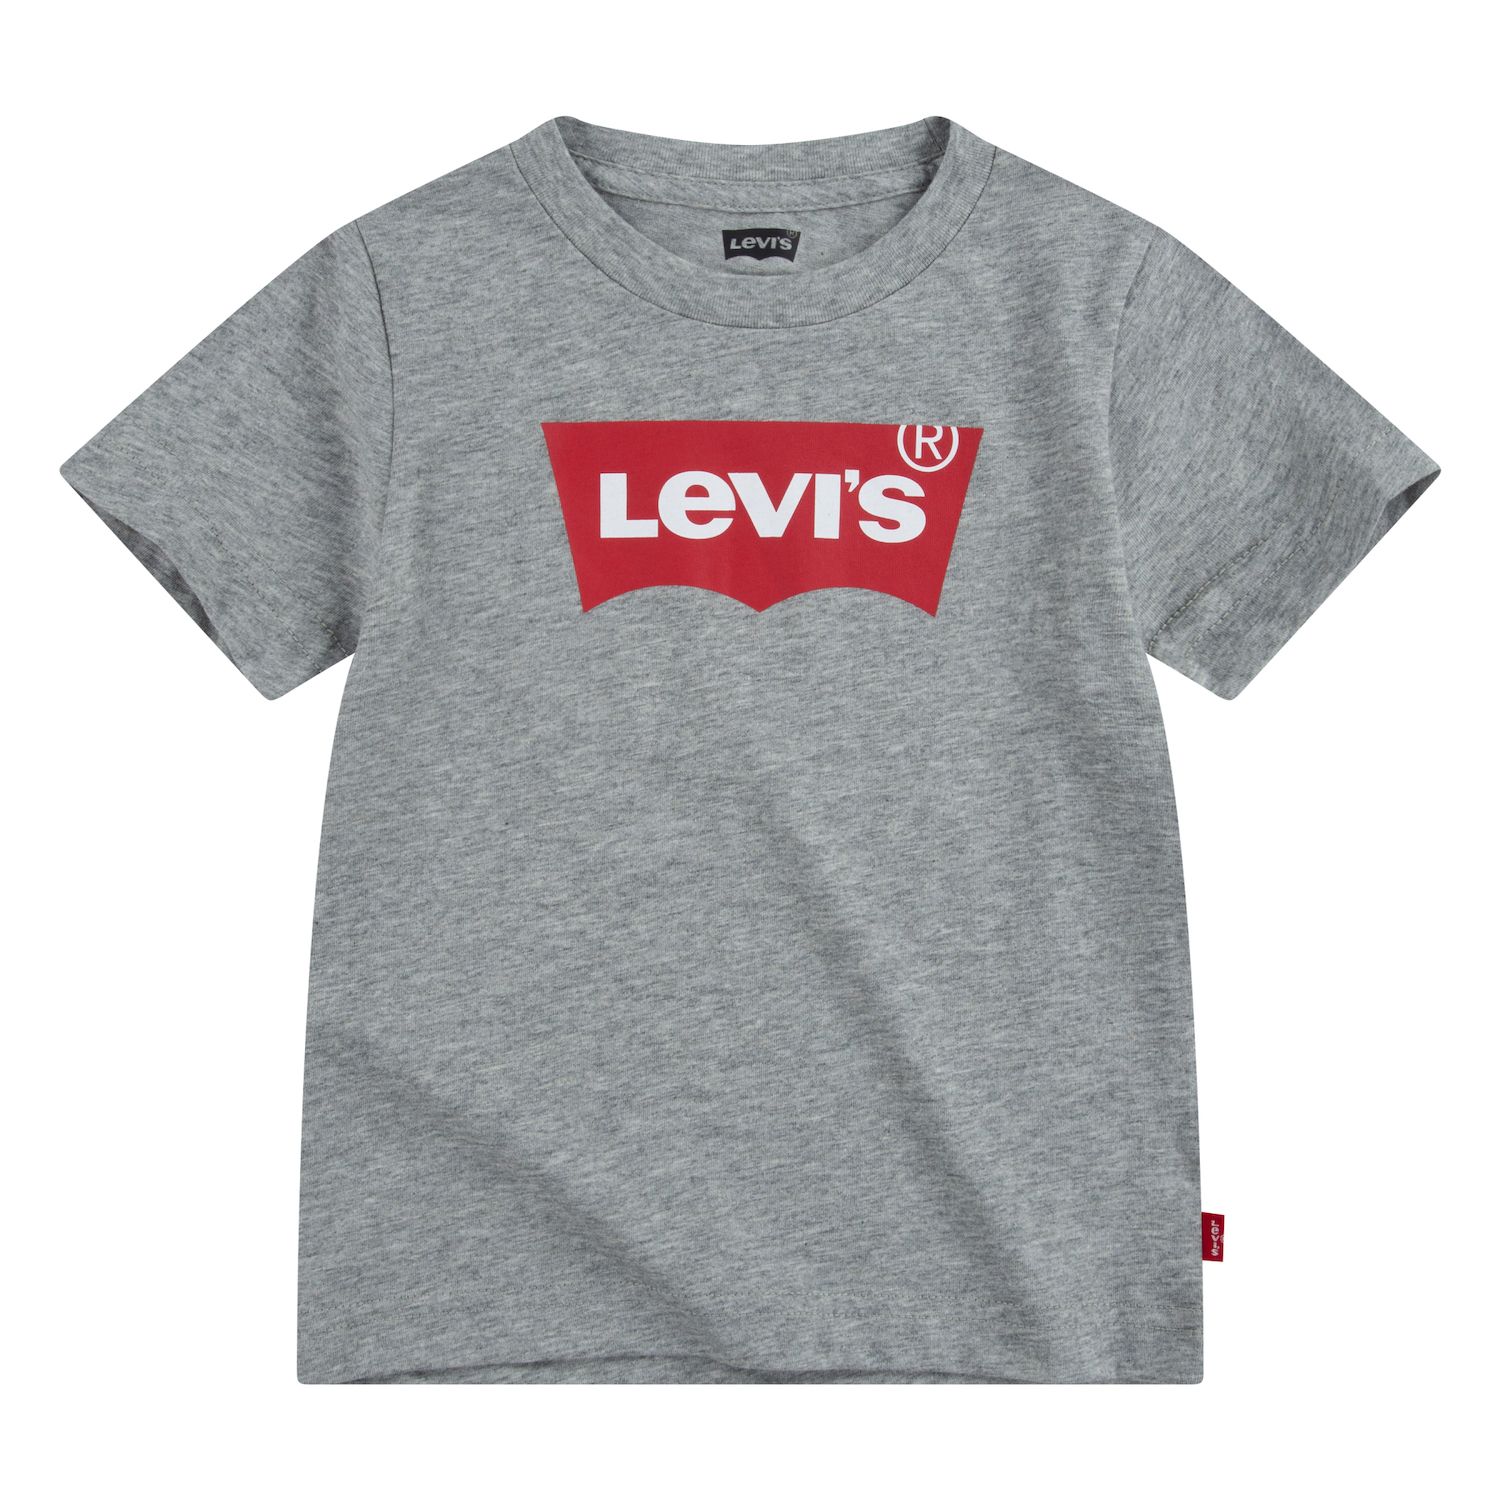 Boys Levi's Graphic T-Shirts Kids Tops 